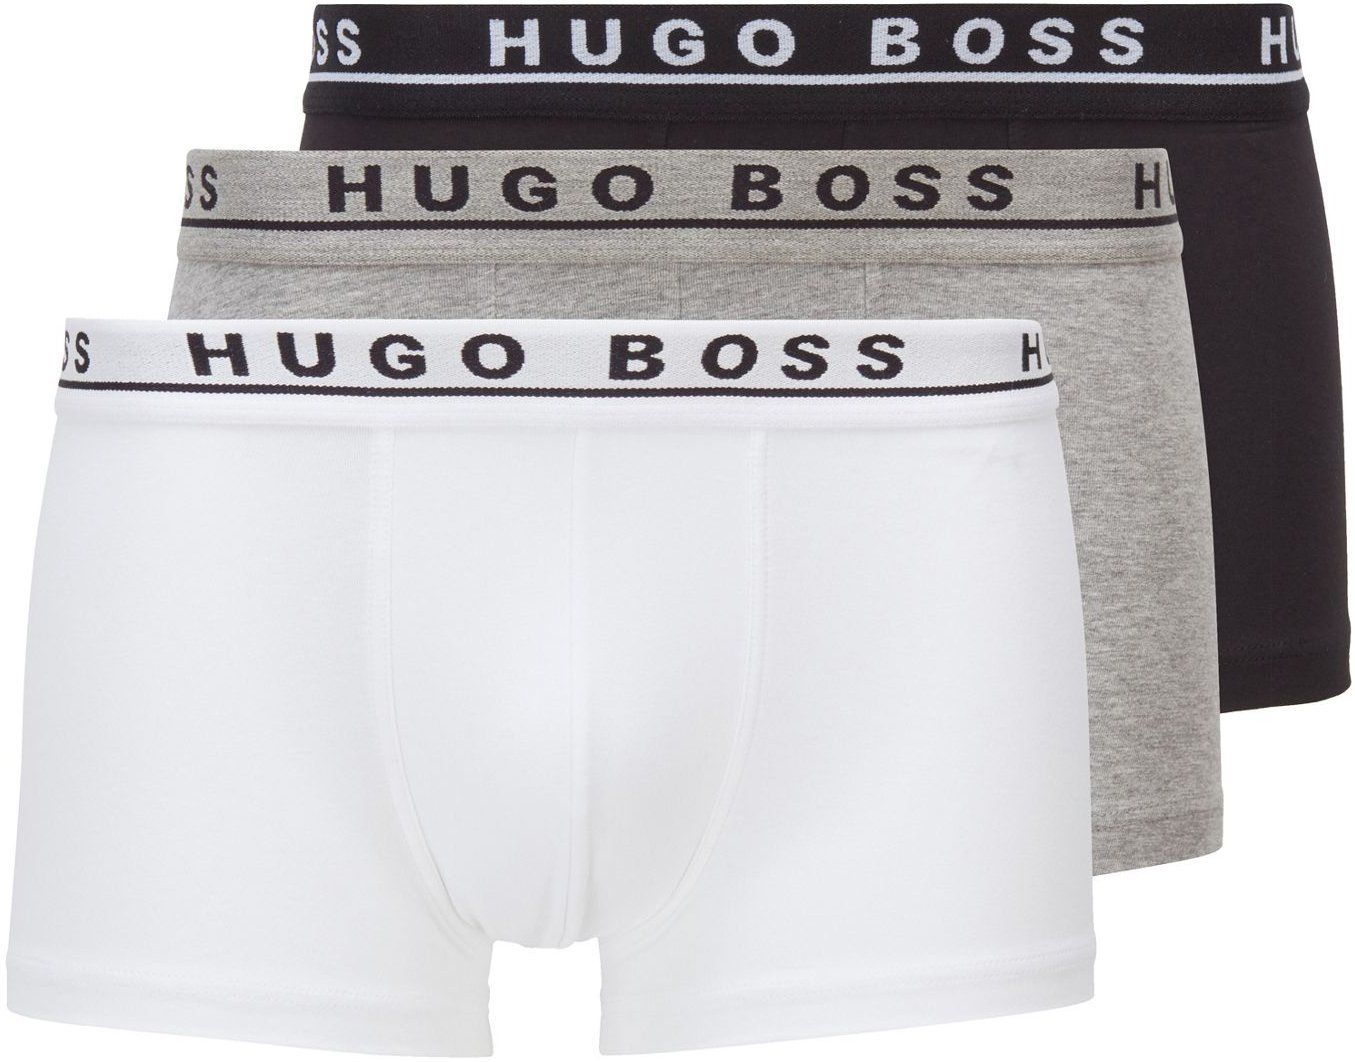 Hugo Boss Boxer Shorts Trunk 3-Pack Grey Dark Grey White Black size L